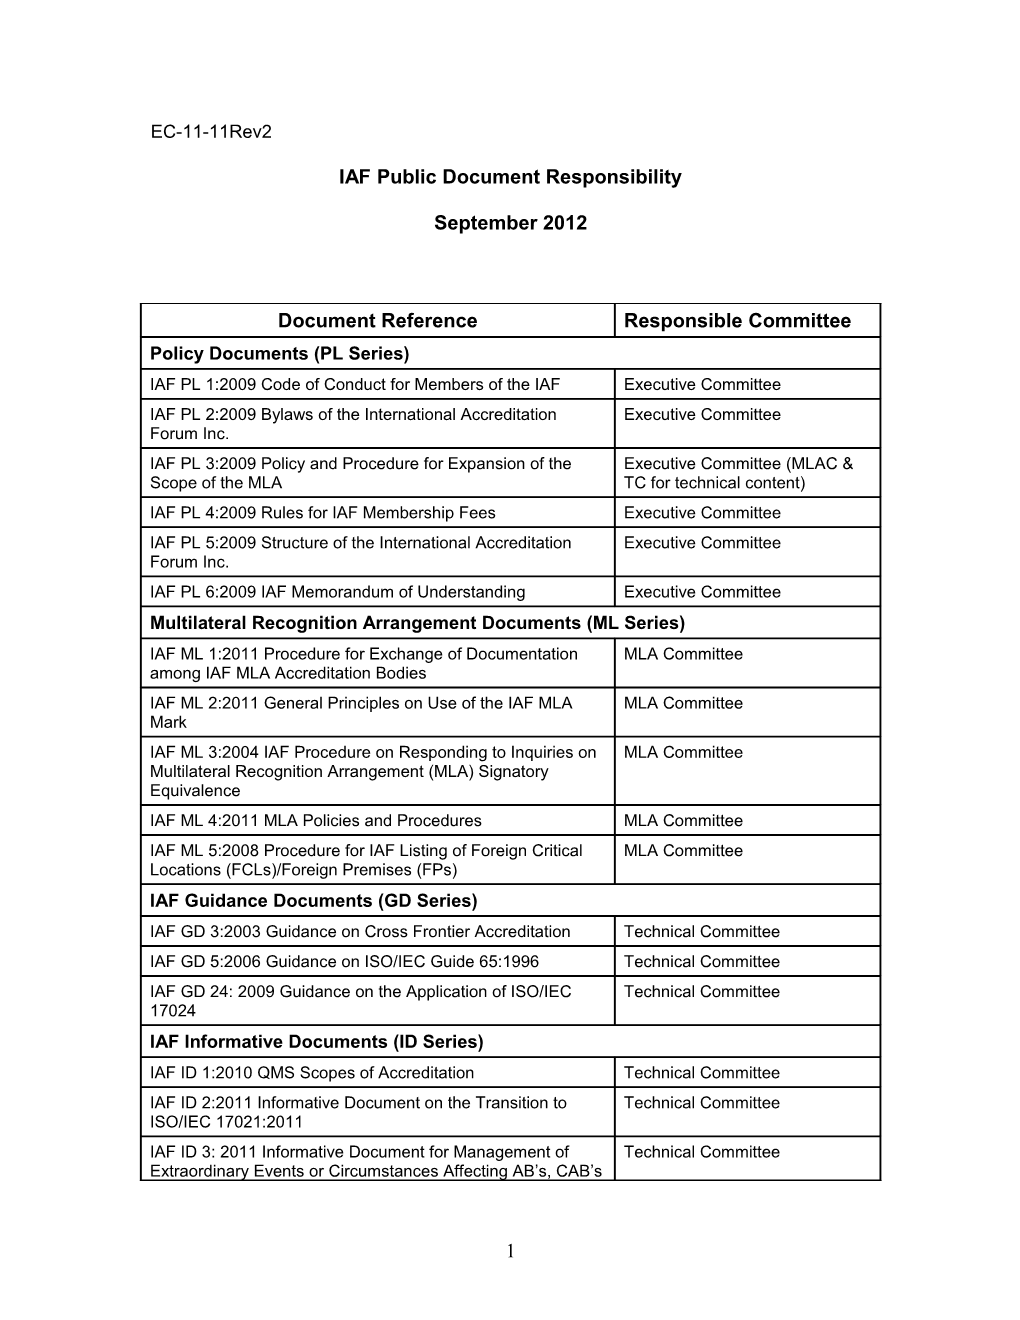 IAF Public Document Responsibility